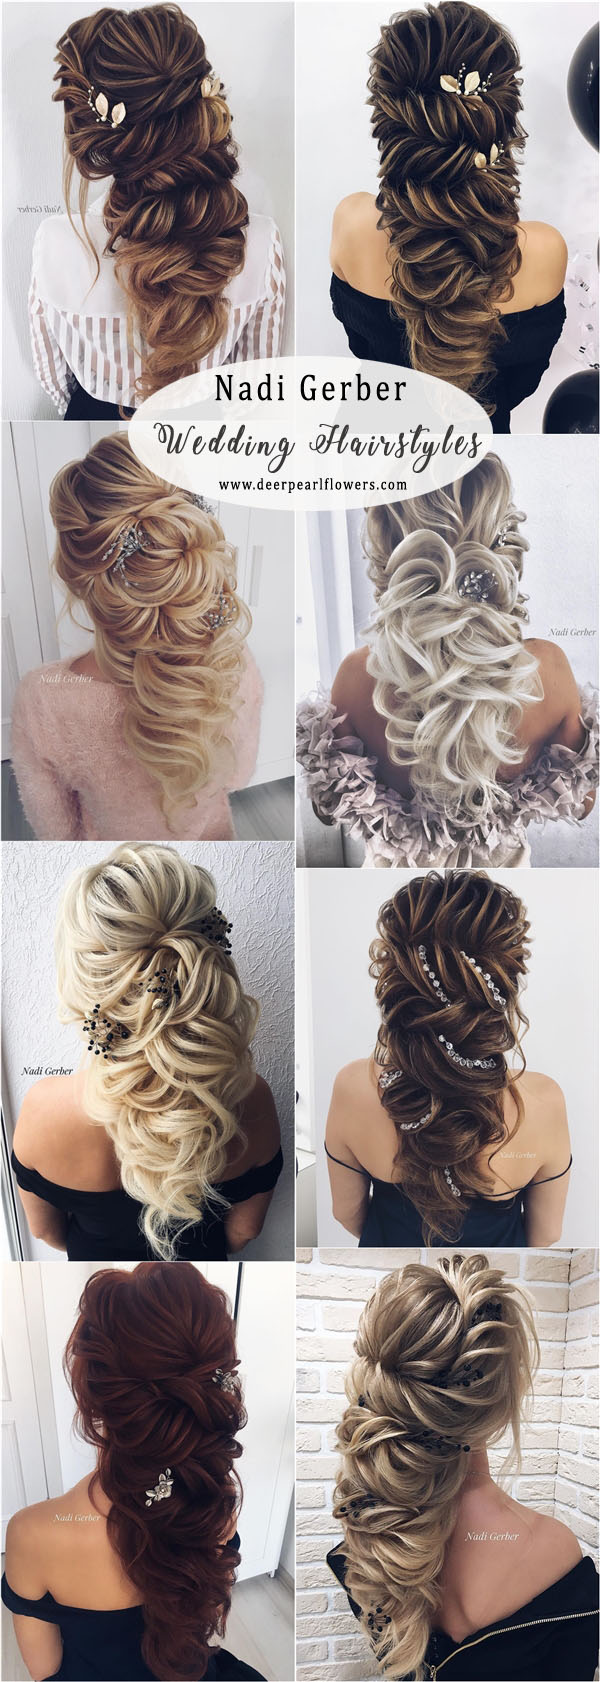 Nadi Gerber long wavy wedding hairstyle ideas